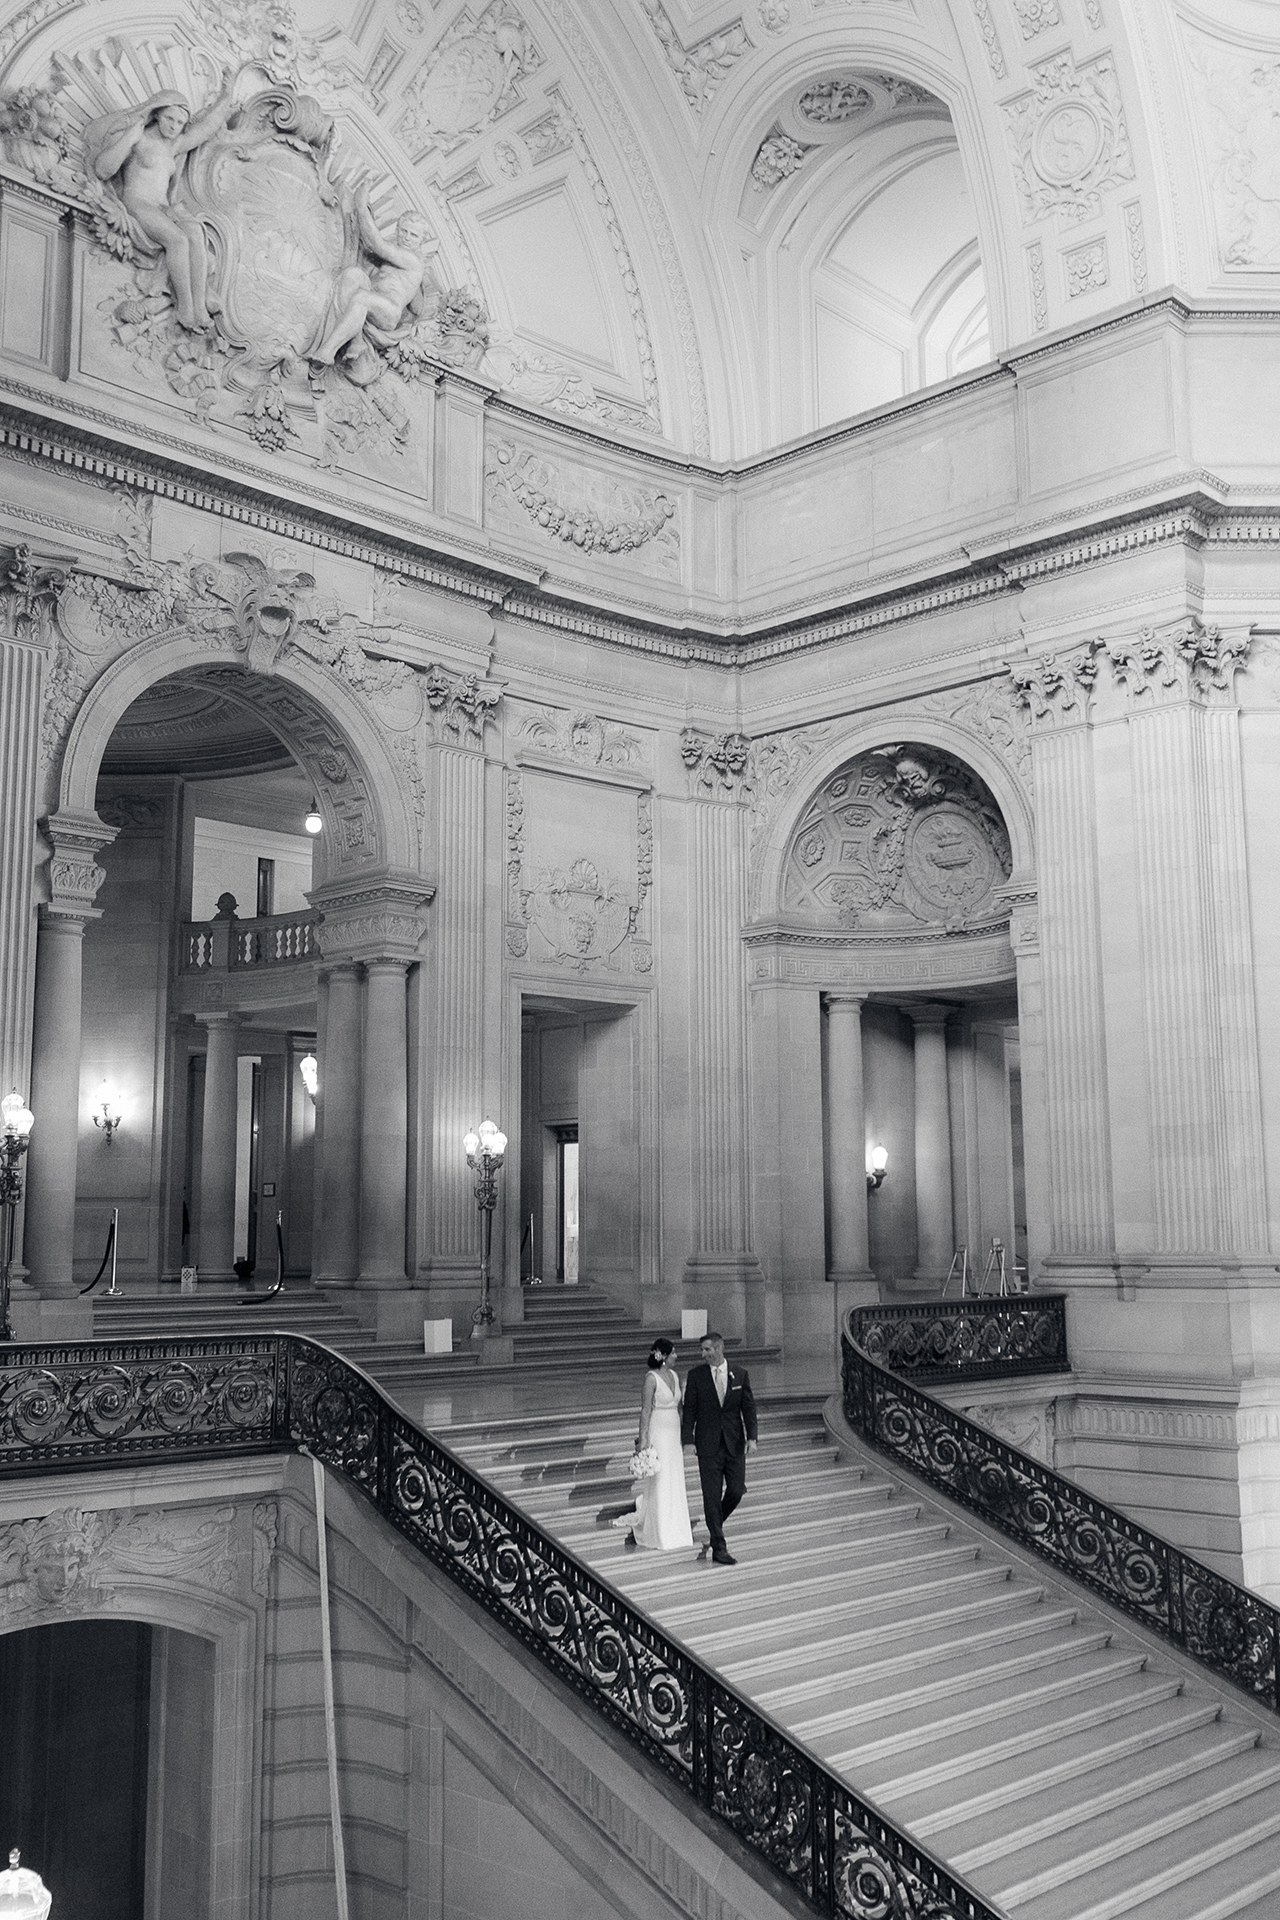 San_Francisco_City_Hall_Wedding_018.jpg